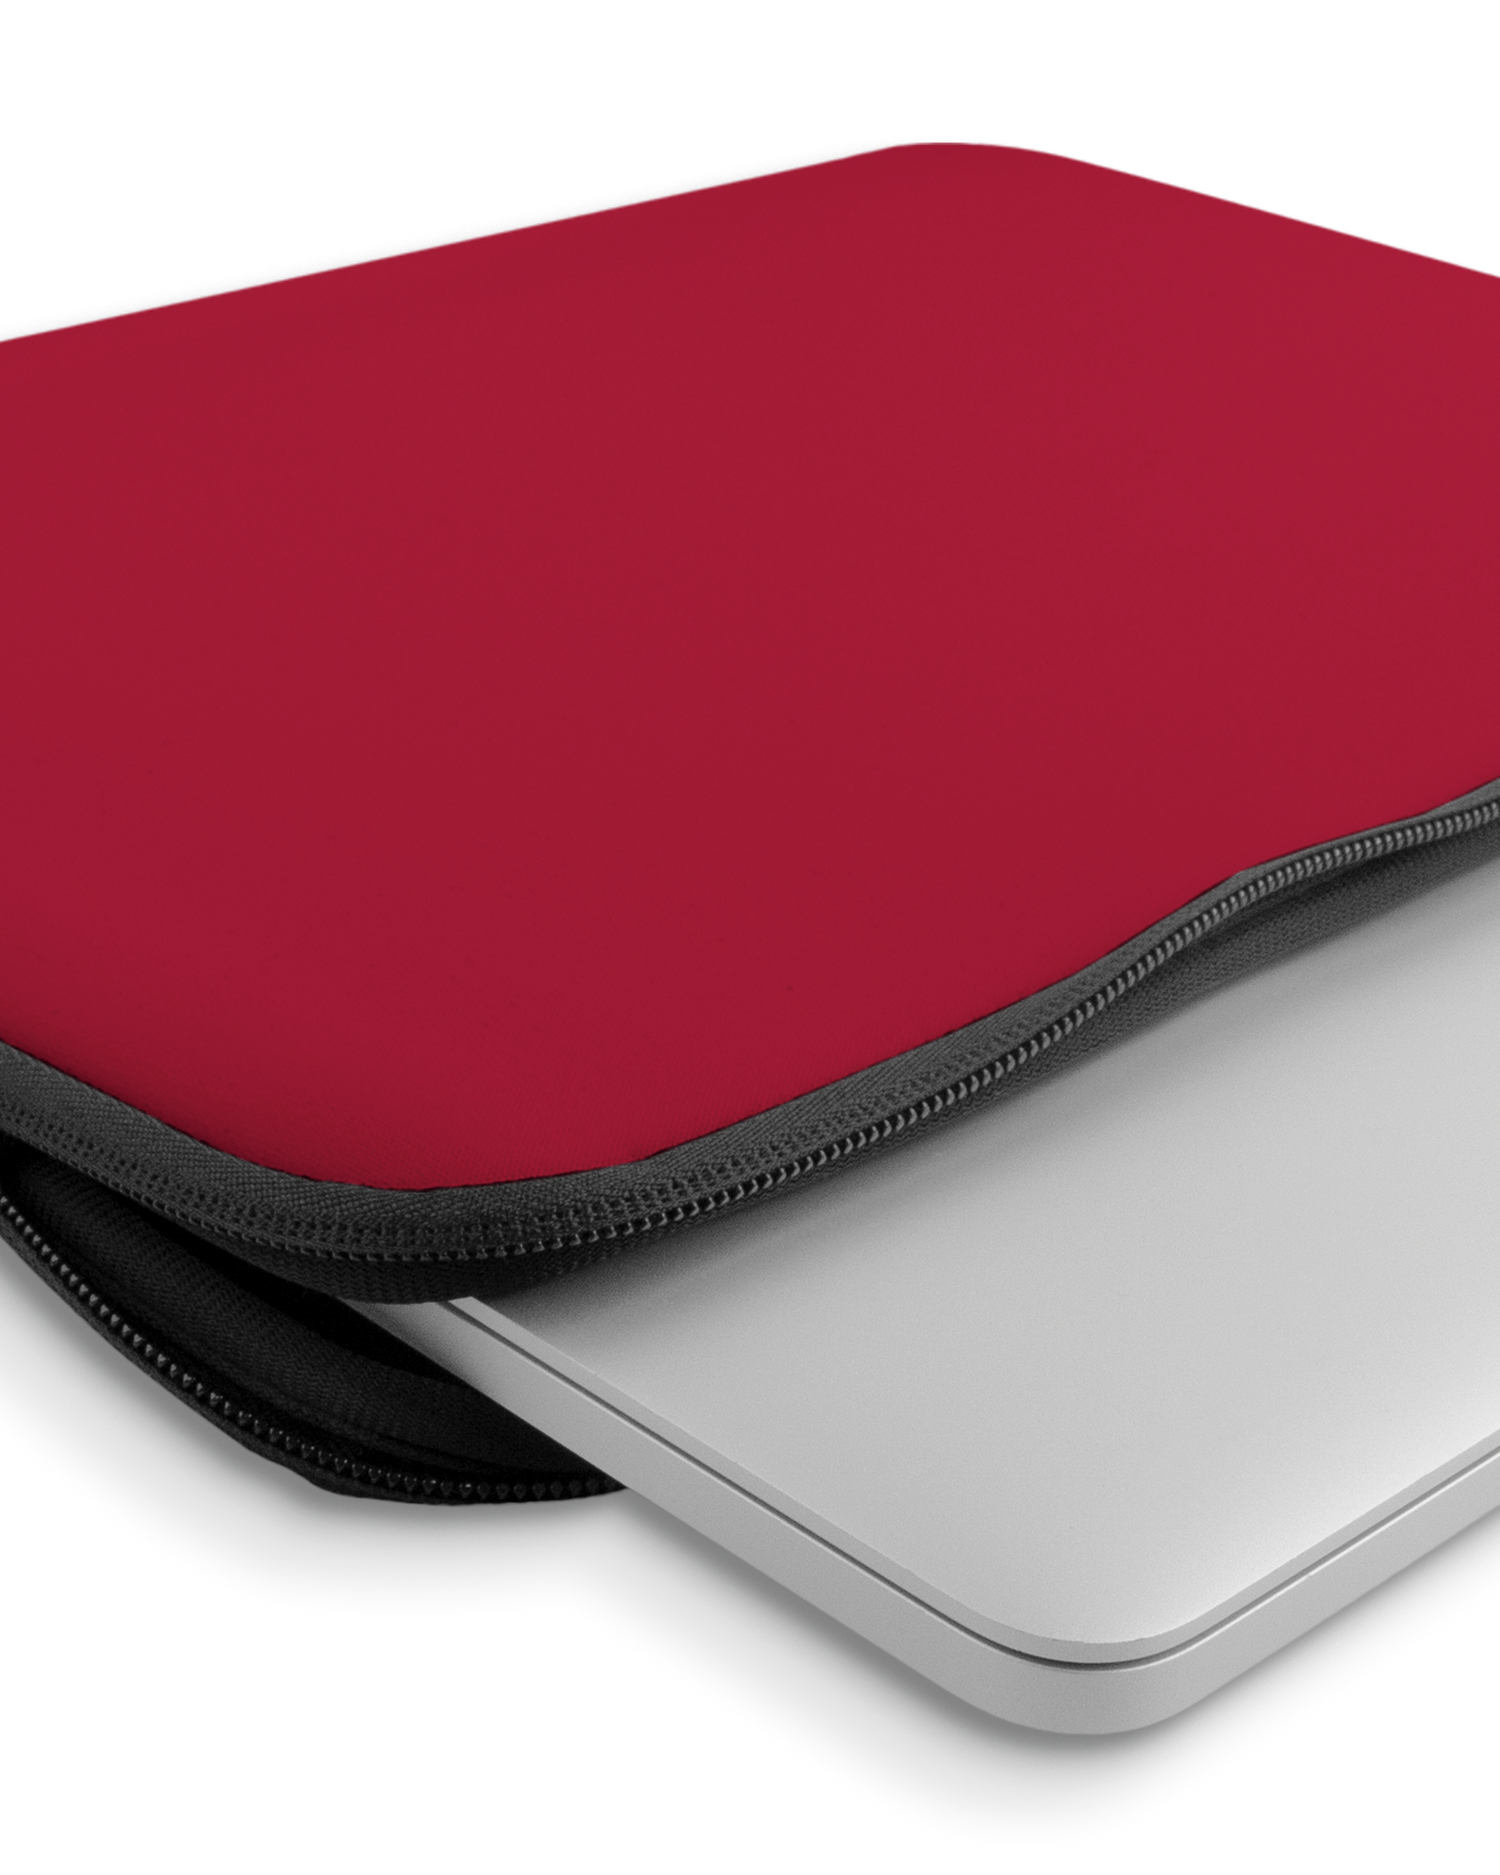 RED Laptophülle 14-15 Zoll mit Gerät im Inneren